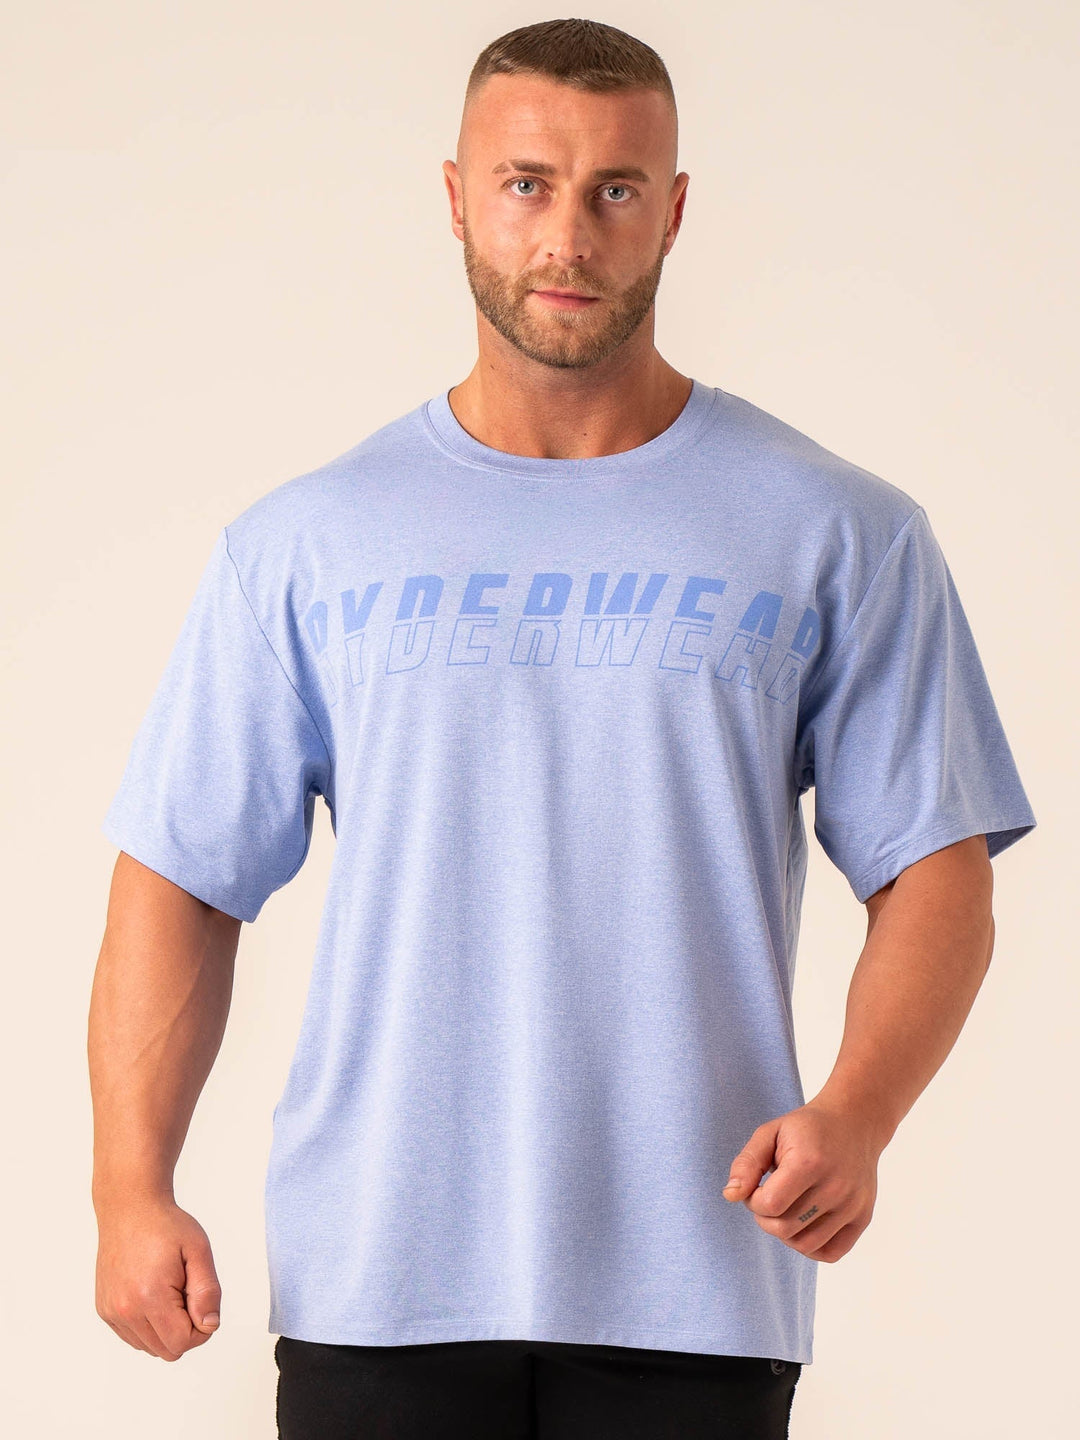 Soft Tech Oversized T-Shirt - Blue Marl Clothing Ryderwear 